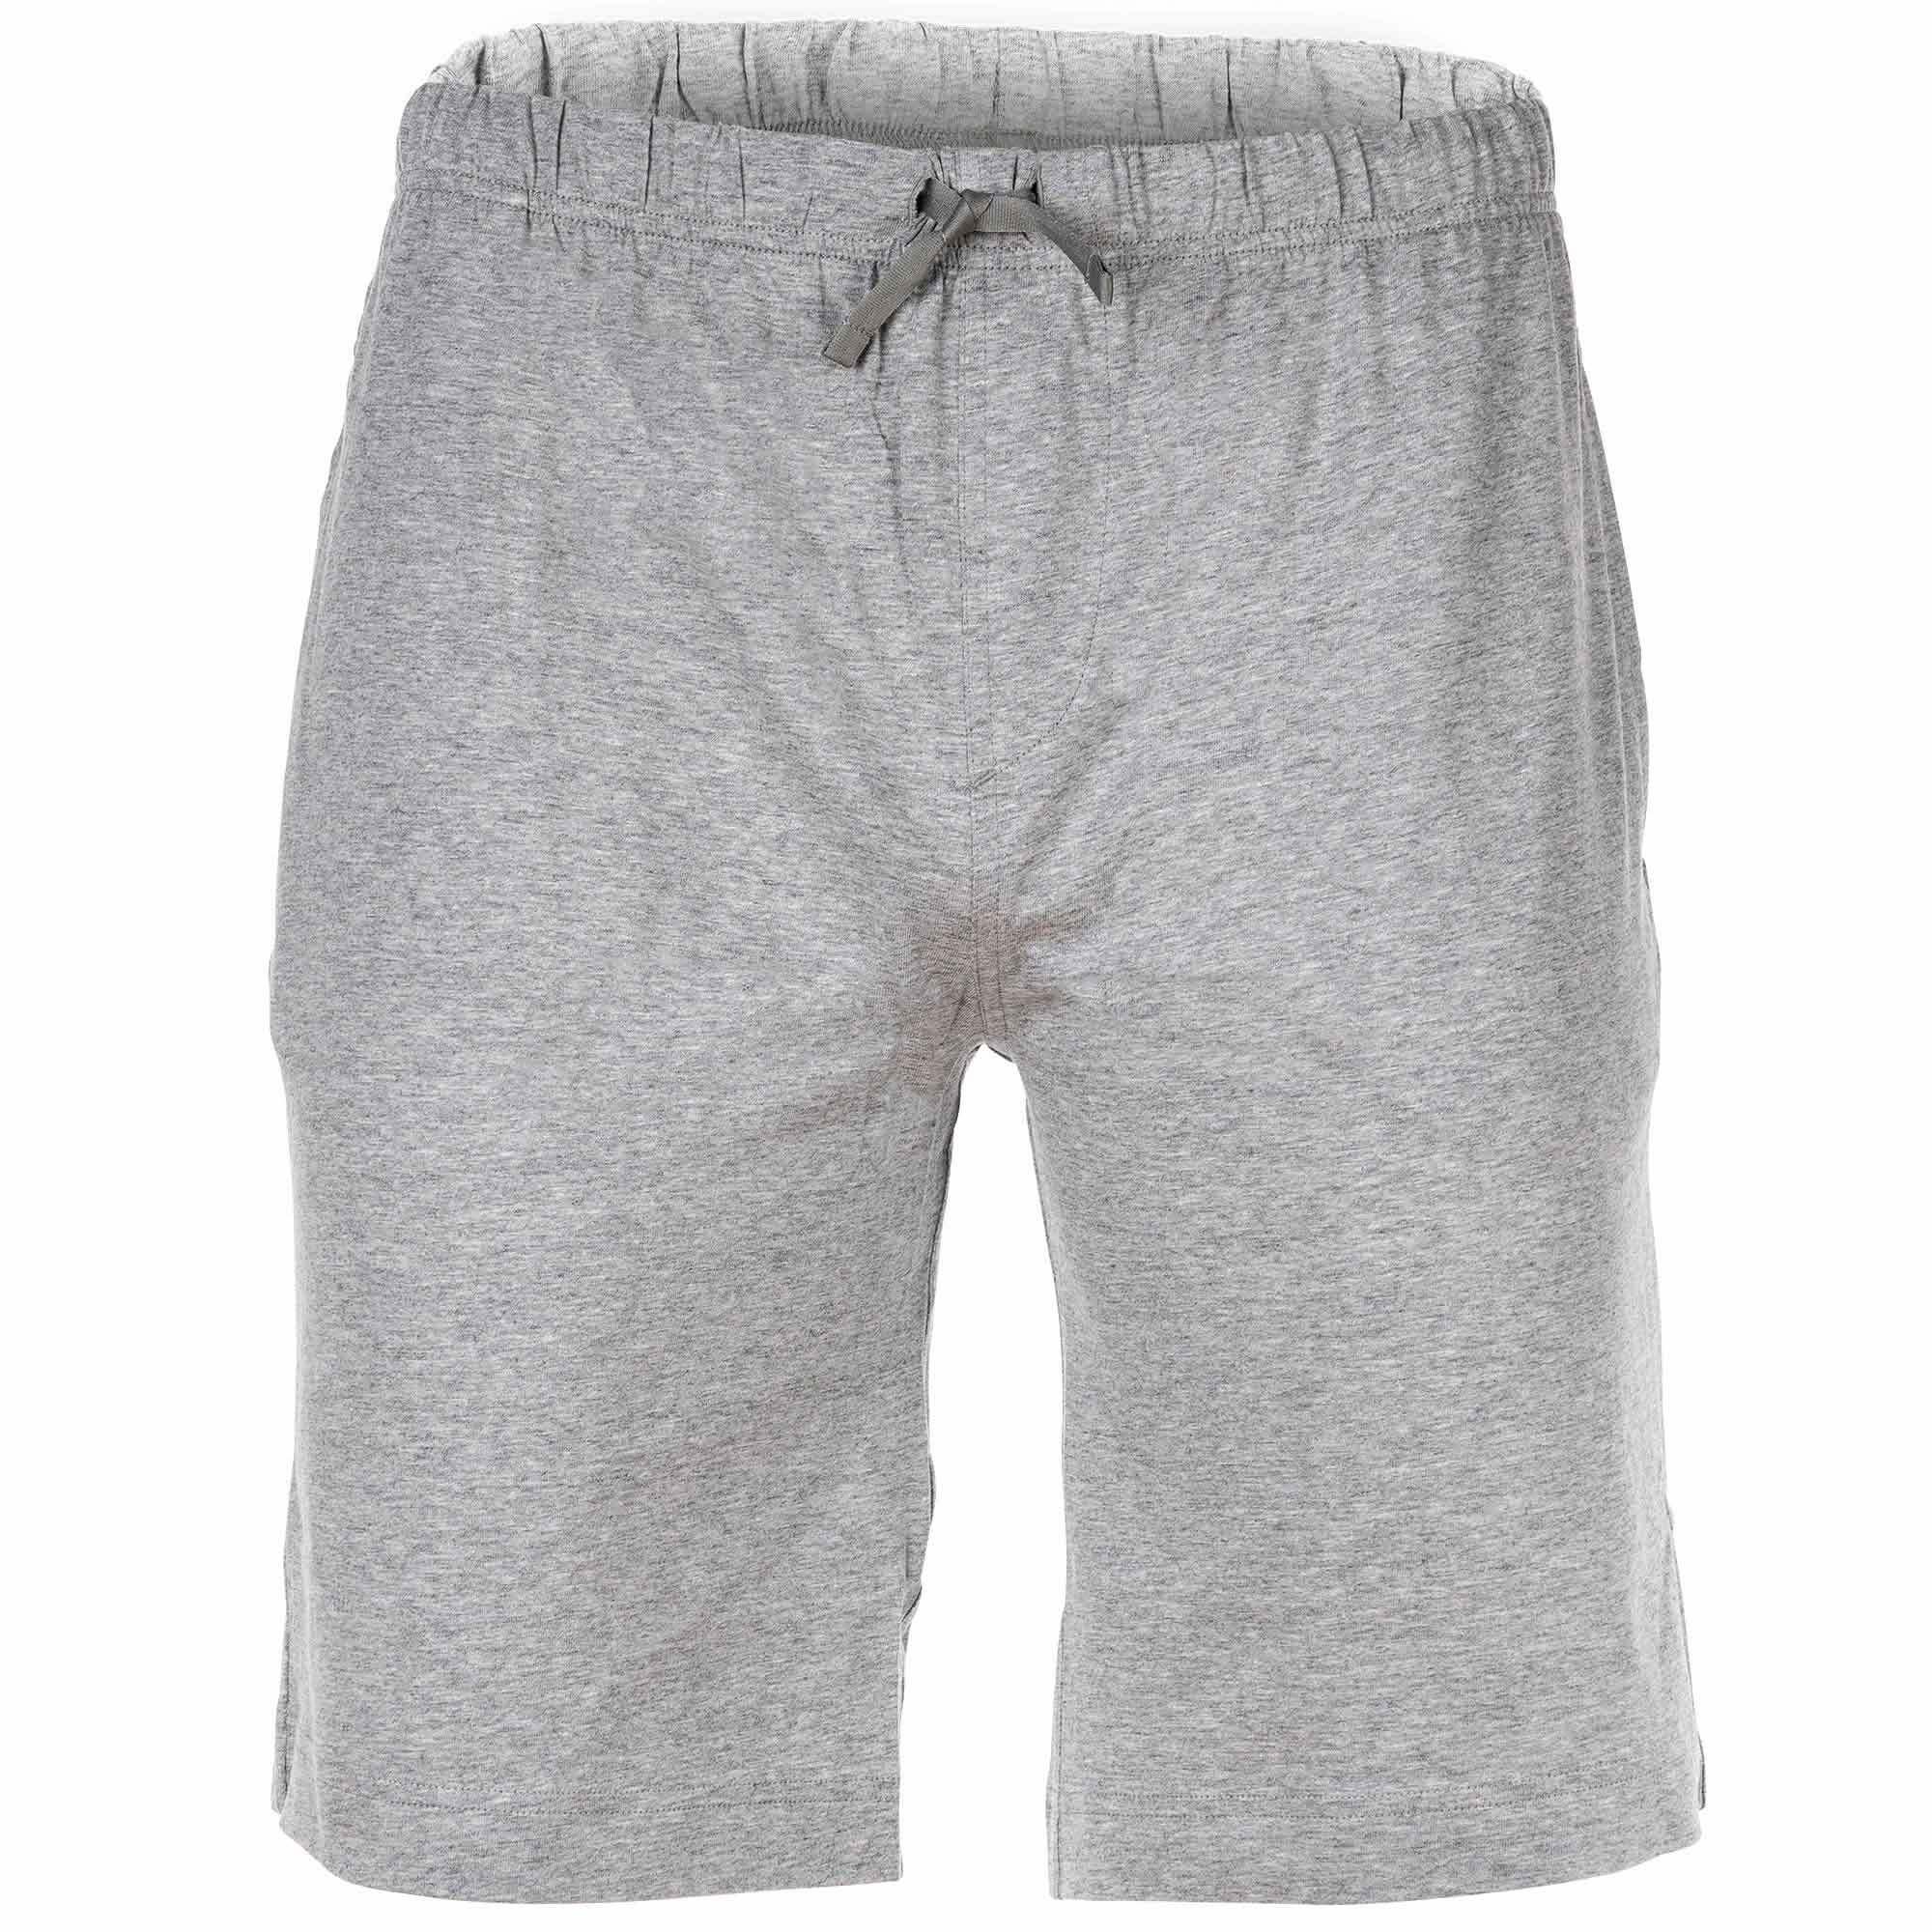 Polo Ralph Grau BOTTOM SHORT Shorts - Herren Pyjama SLEEP - Lauren SLEEP